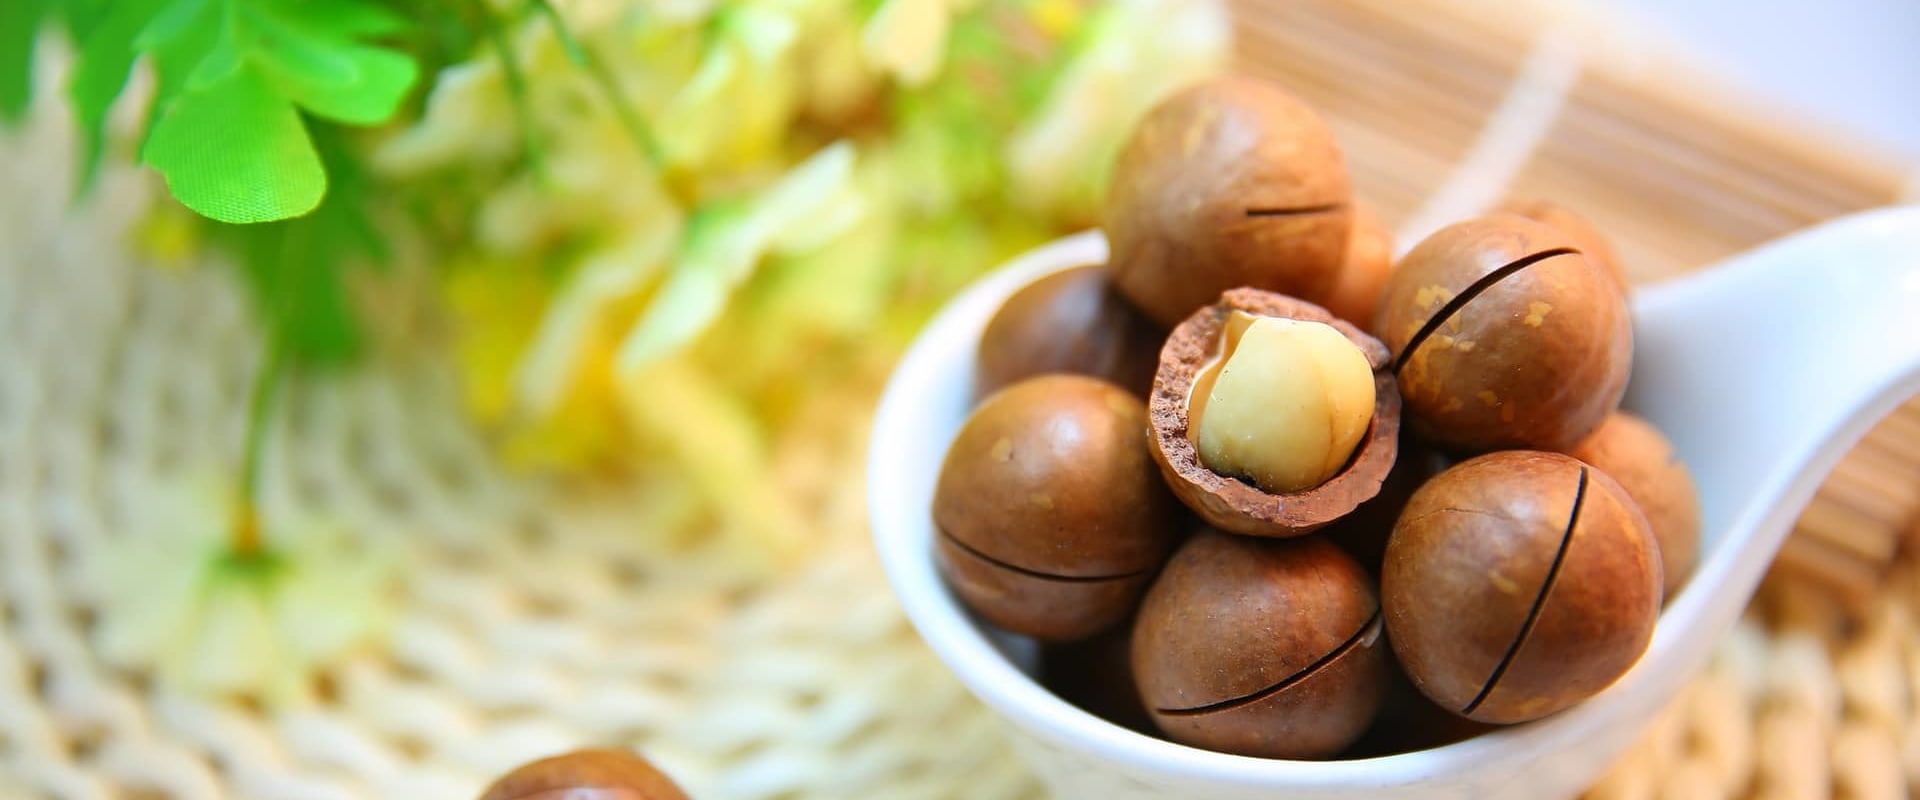 Do macadamia nuts cause weight gain?